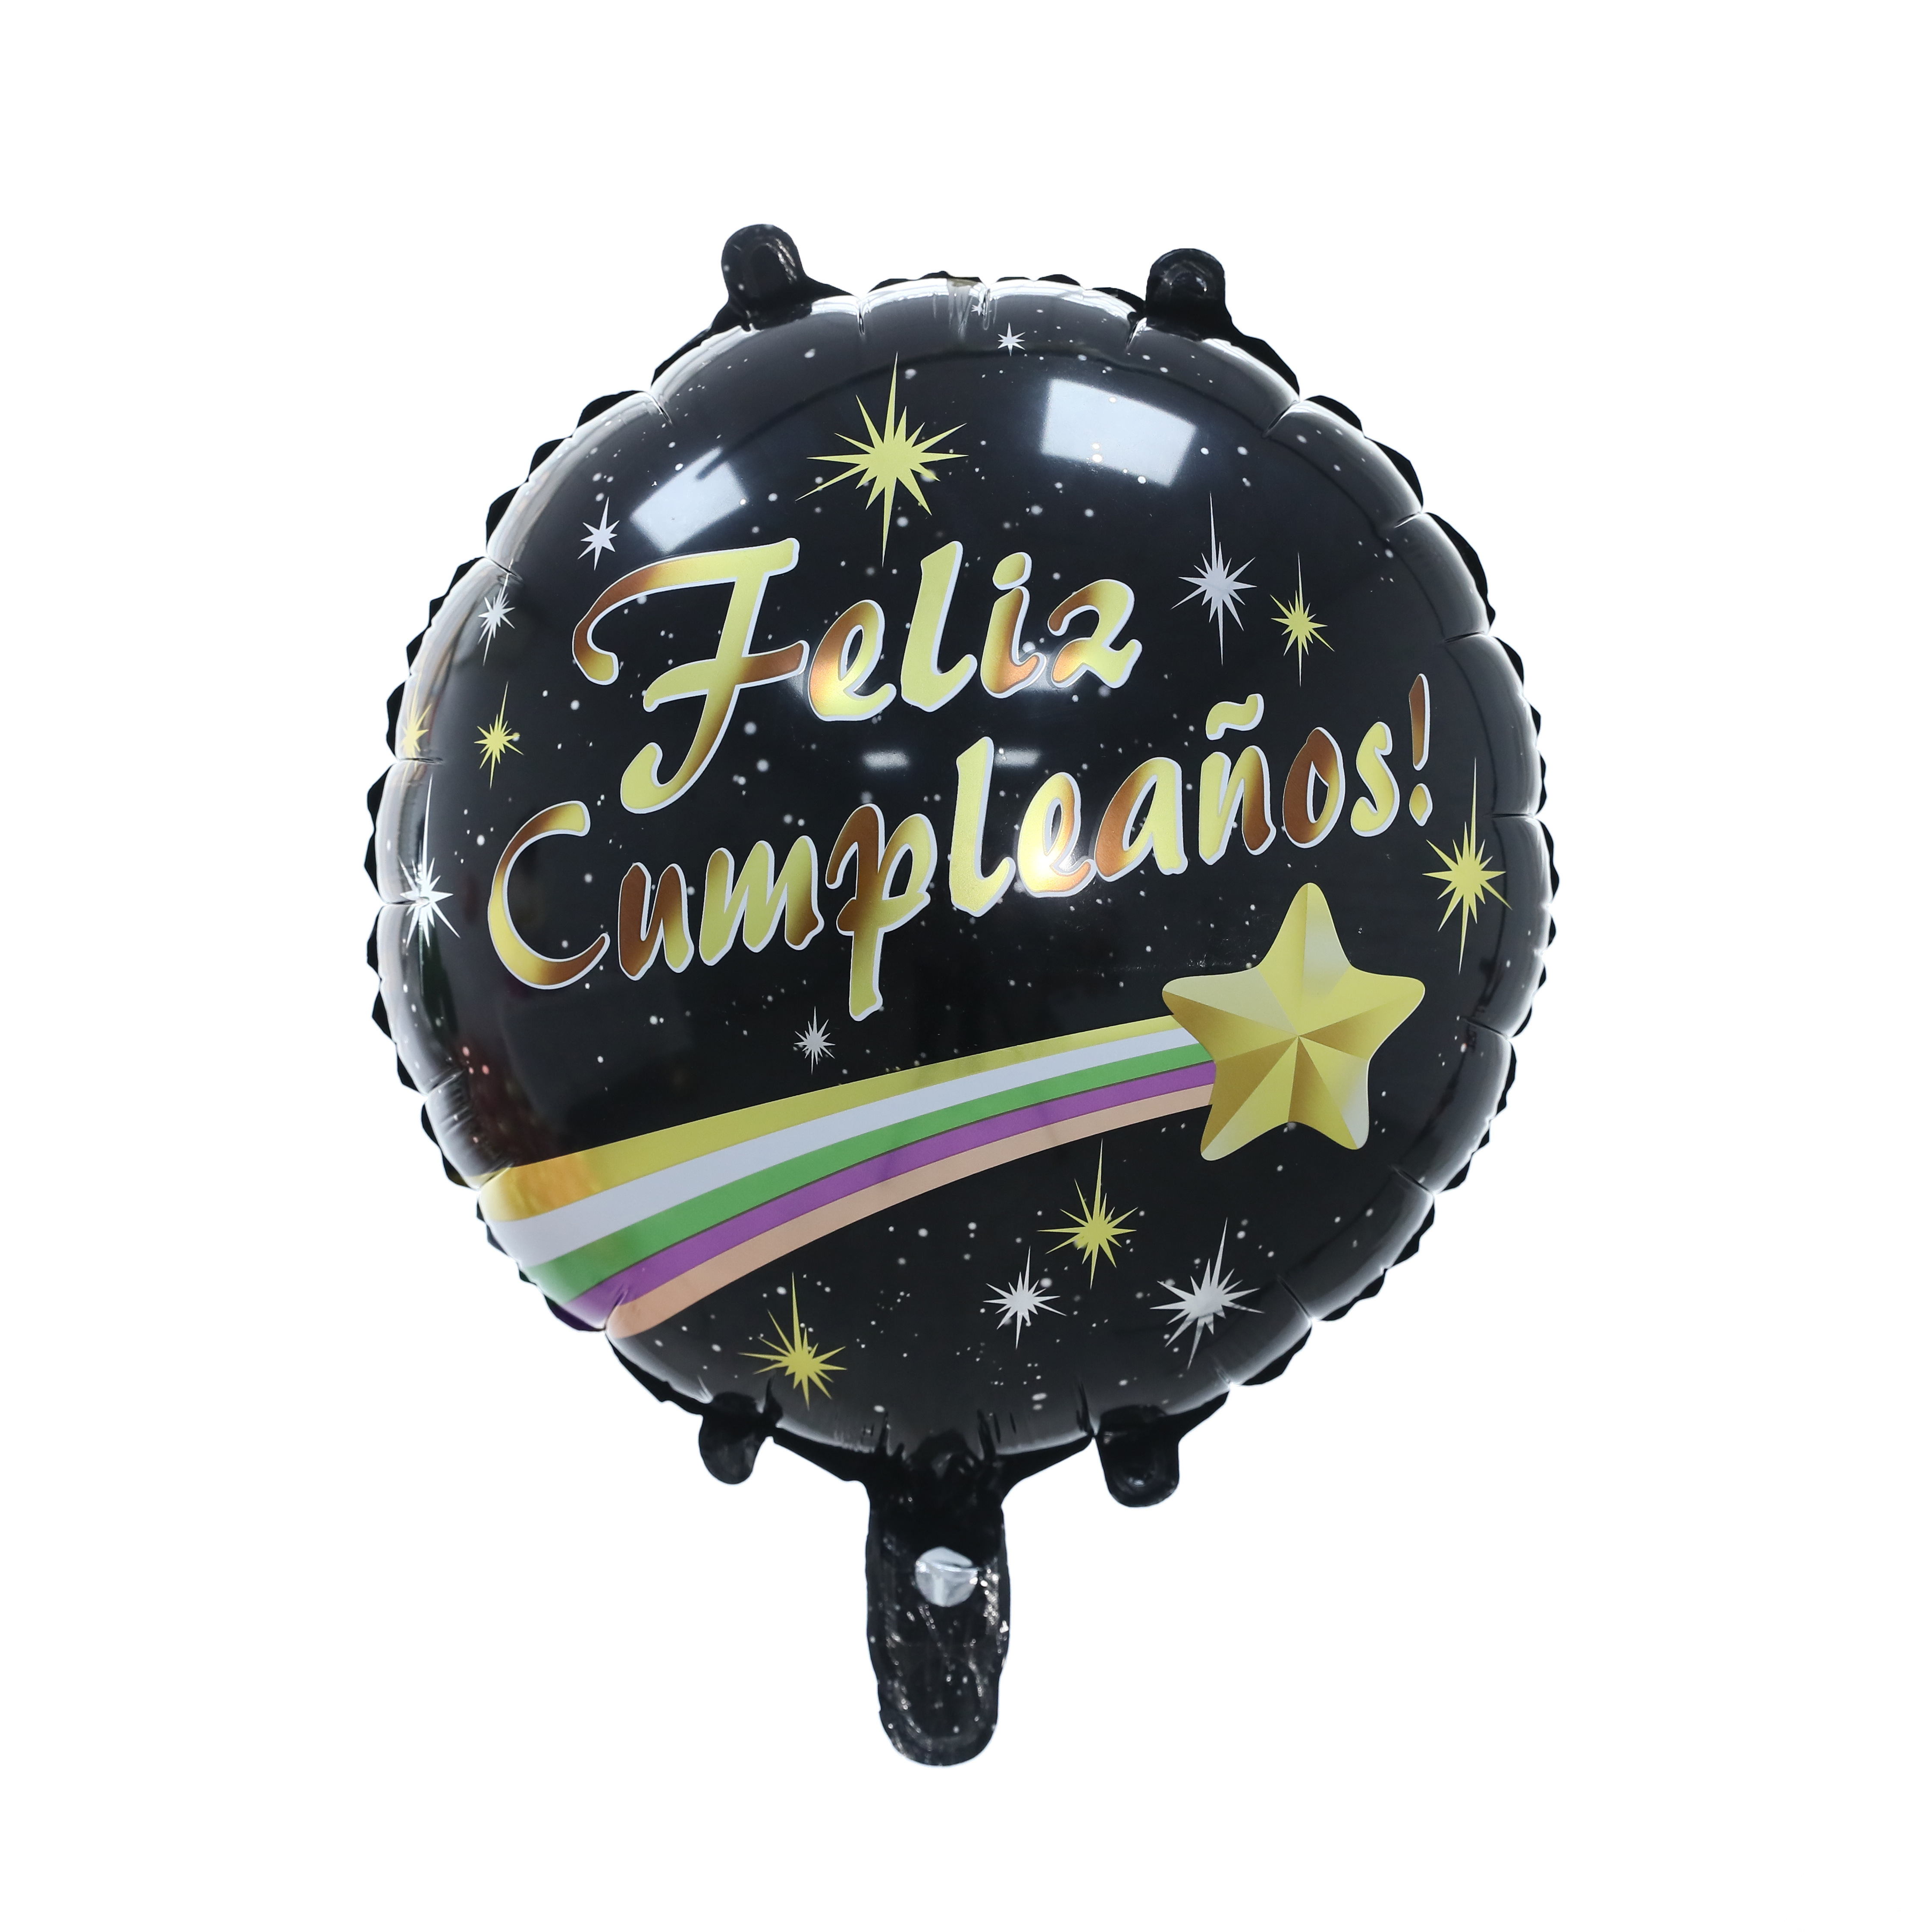 Ballon aluminium Happy birthday Fluo Party 45 cm - Vegaooparty